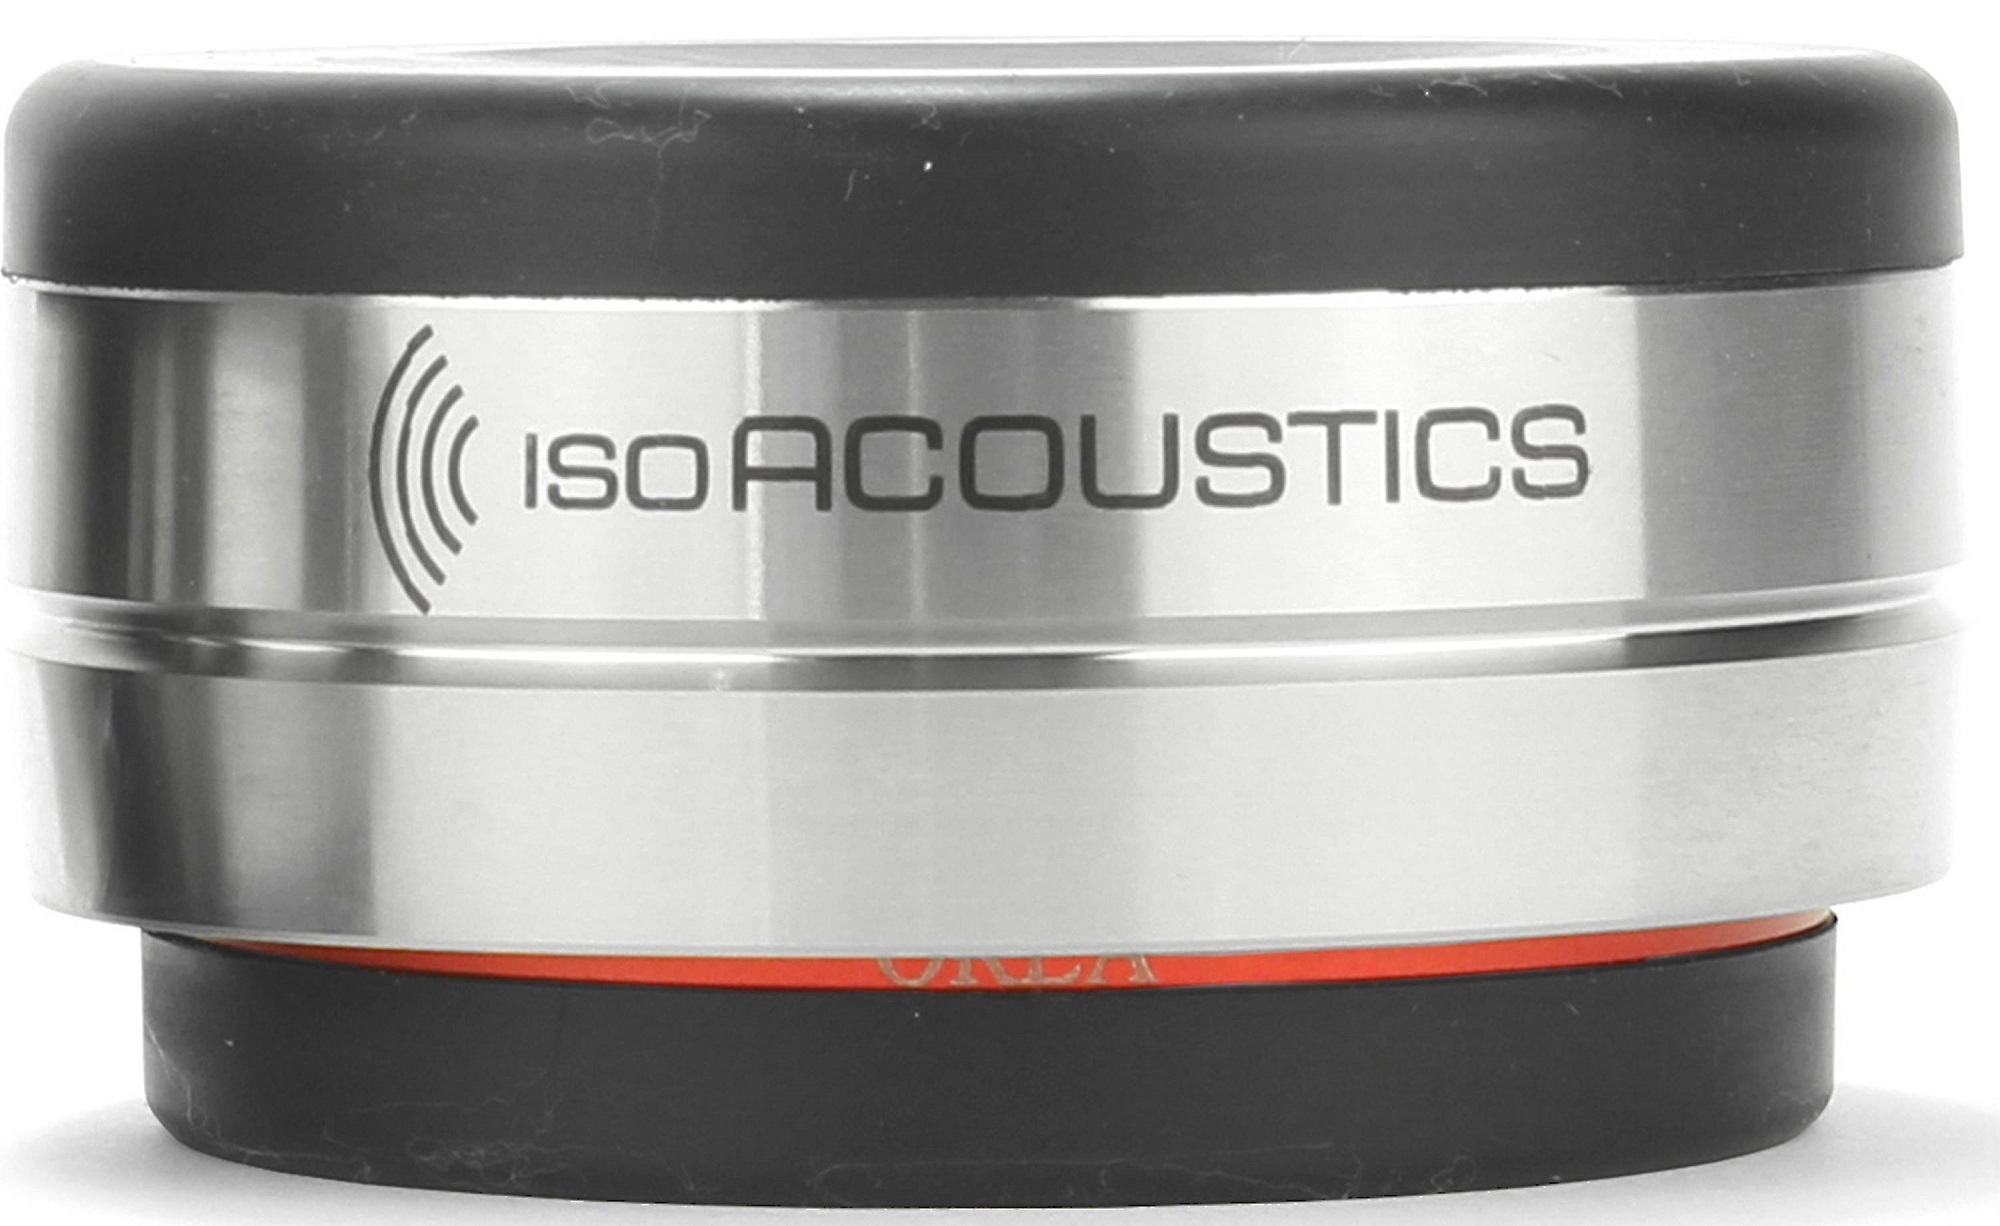 isoacoustics-orea-bordeaux-vibration-isolator-for-audio-components-each